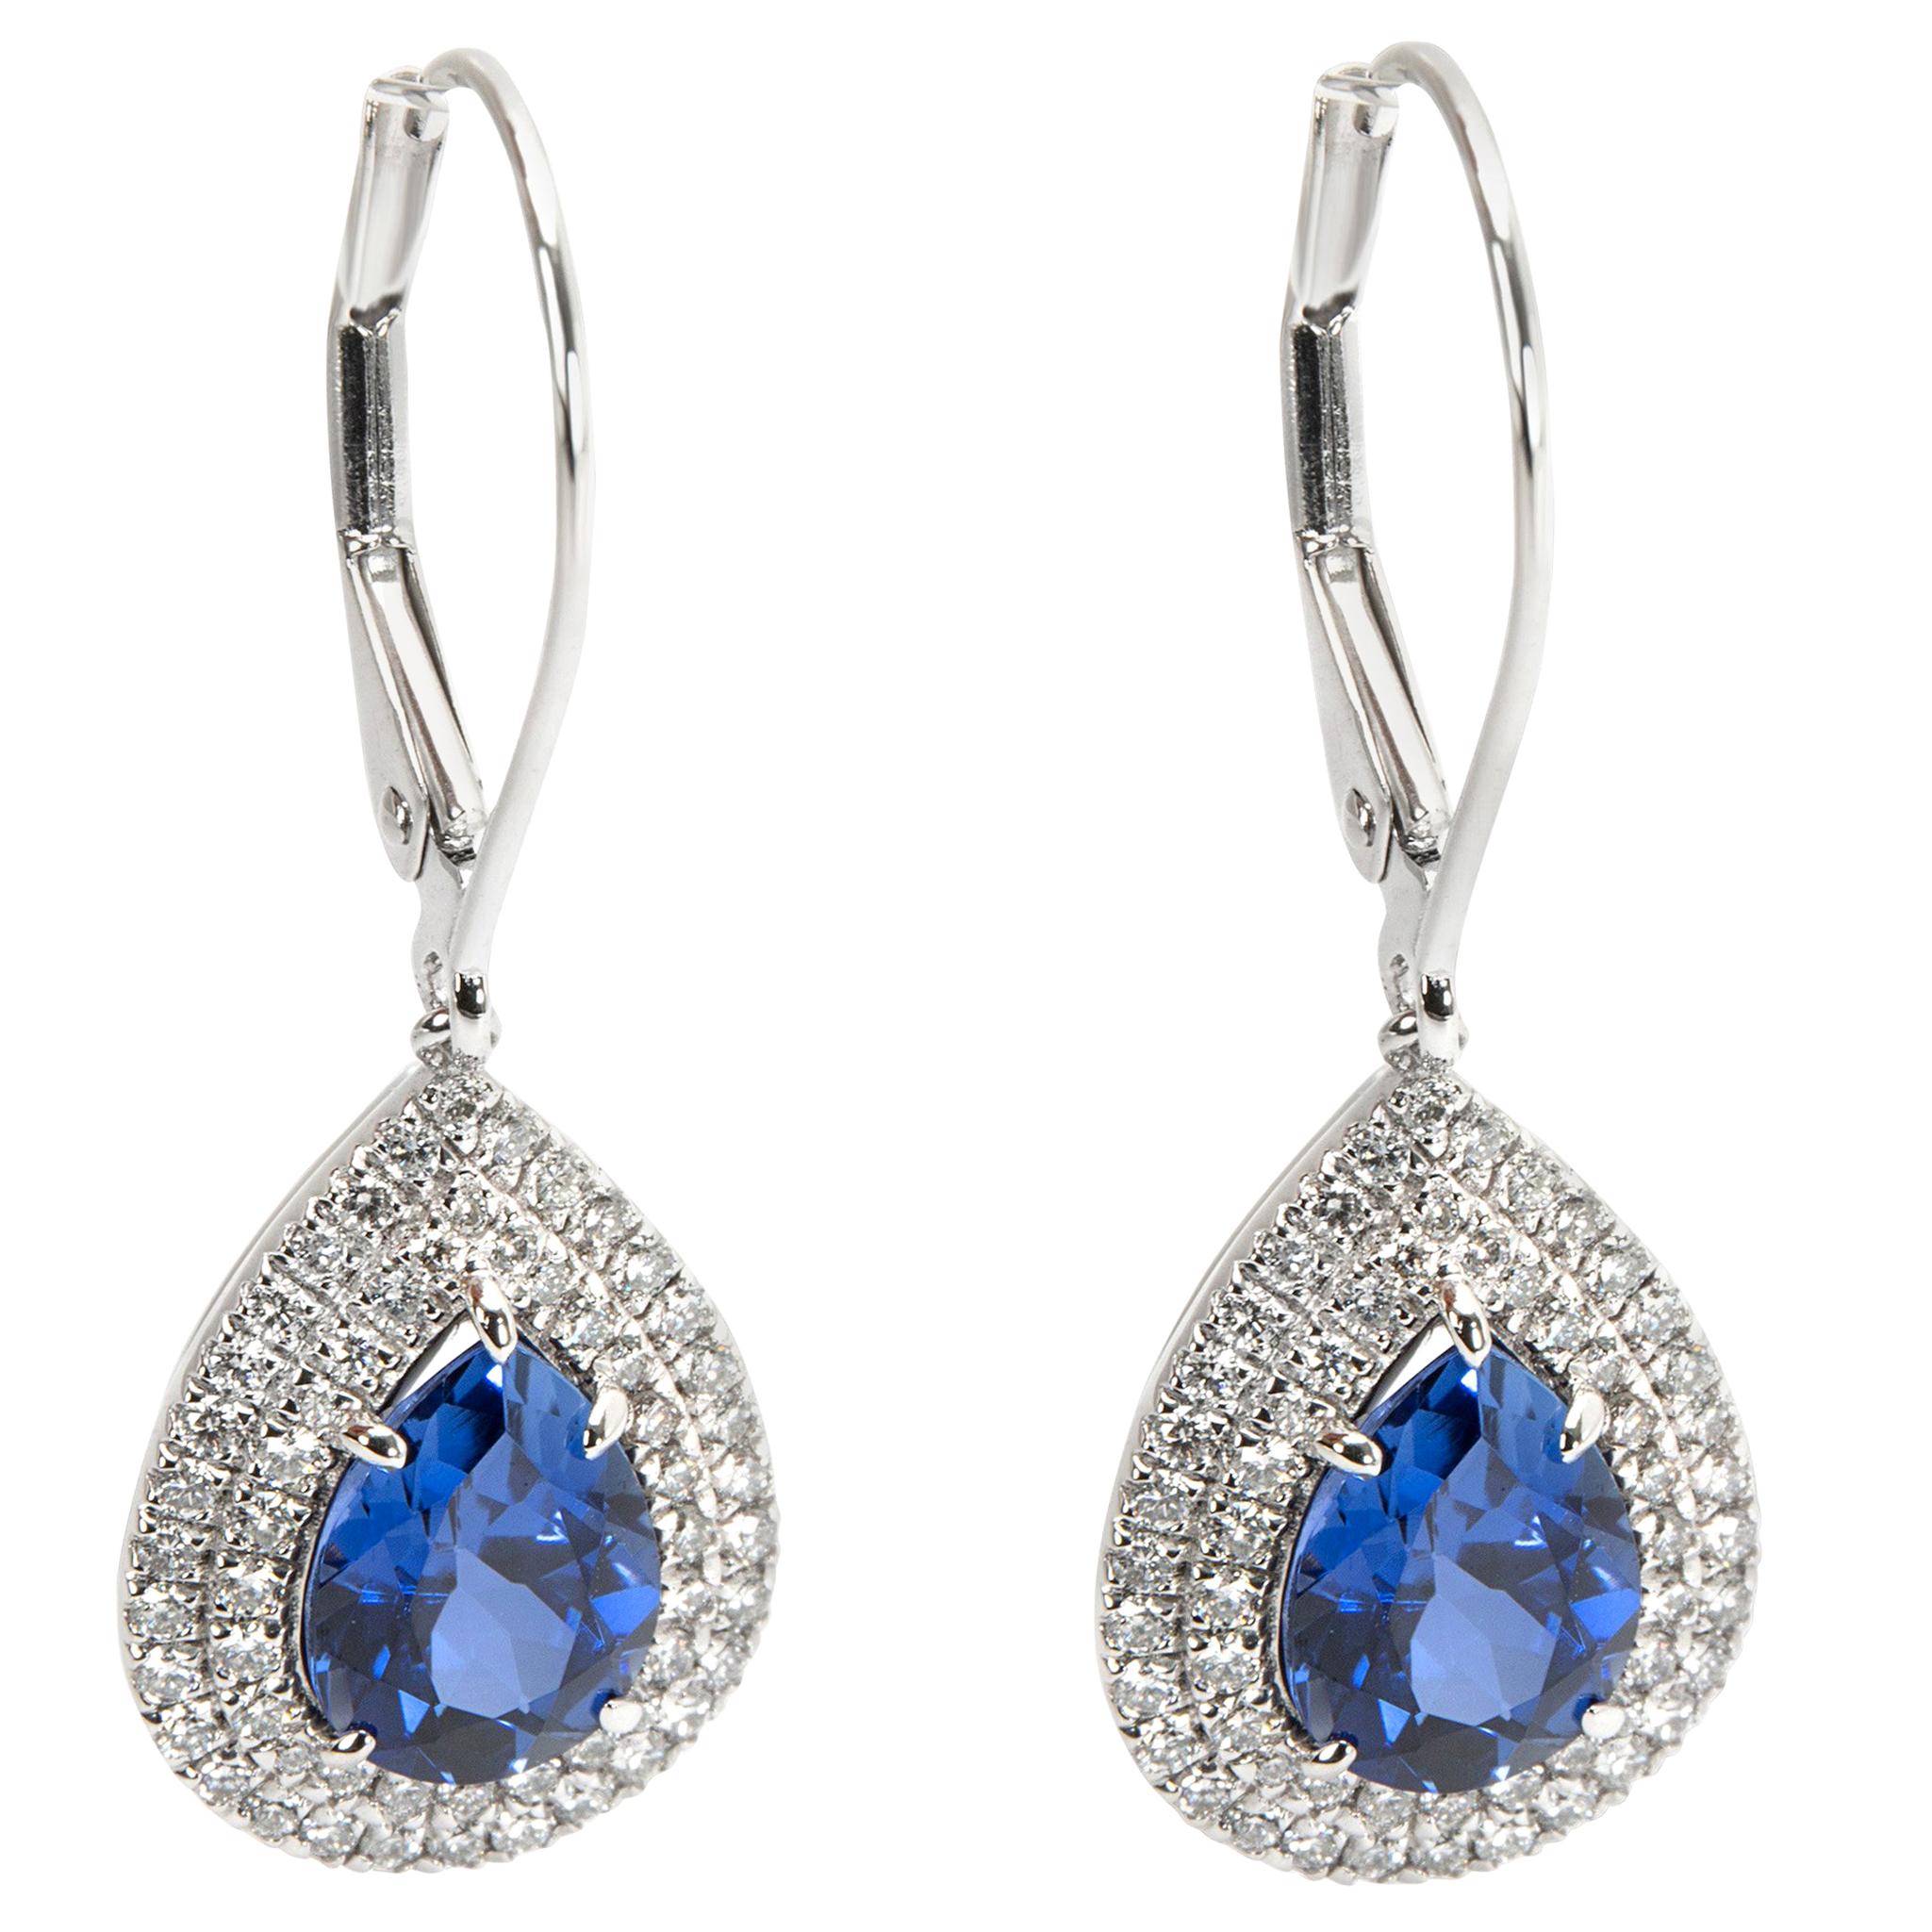 Tiffany & Co. Soleste Tanzanite & Diamond Earrings in Platinum Blue ‘3.01 Carat’